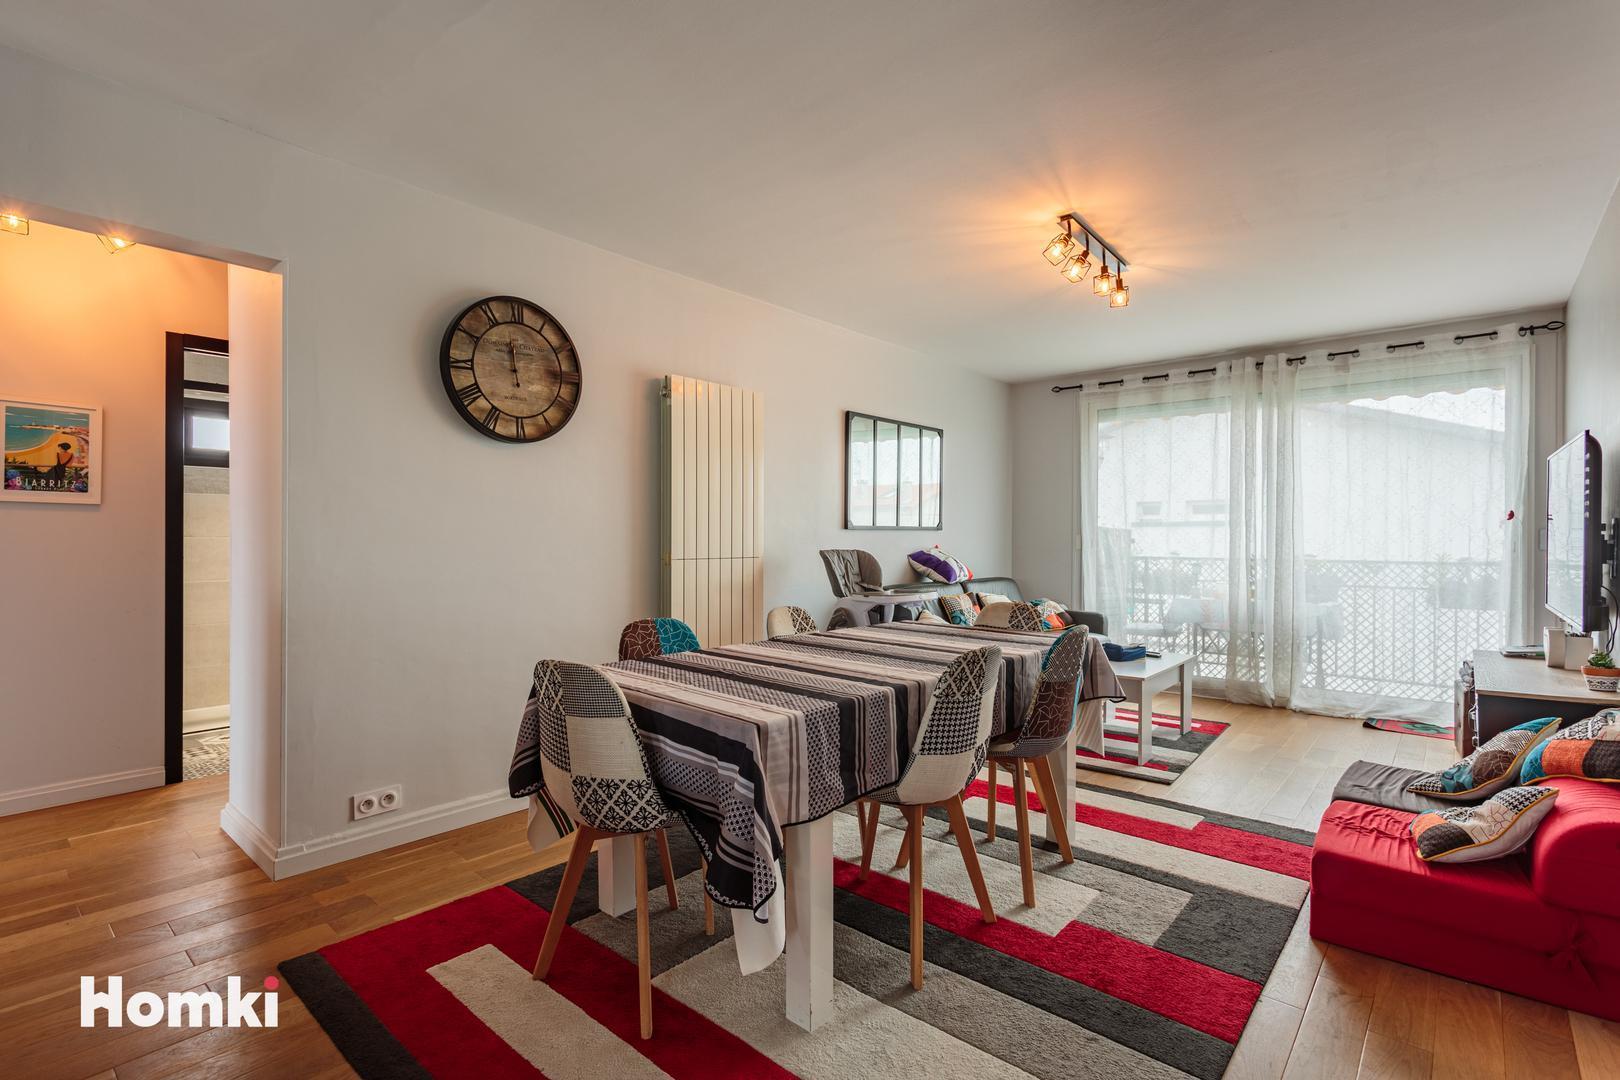 Homki - Vente Appartement  de 64.0 m² à Biarritz 64200